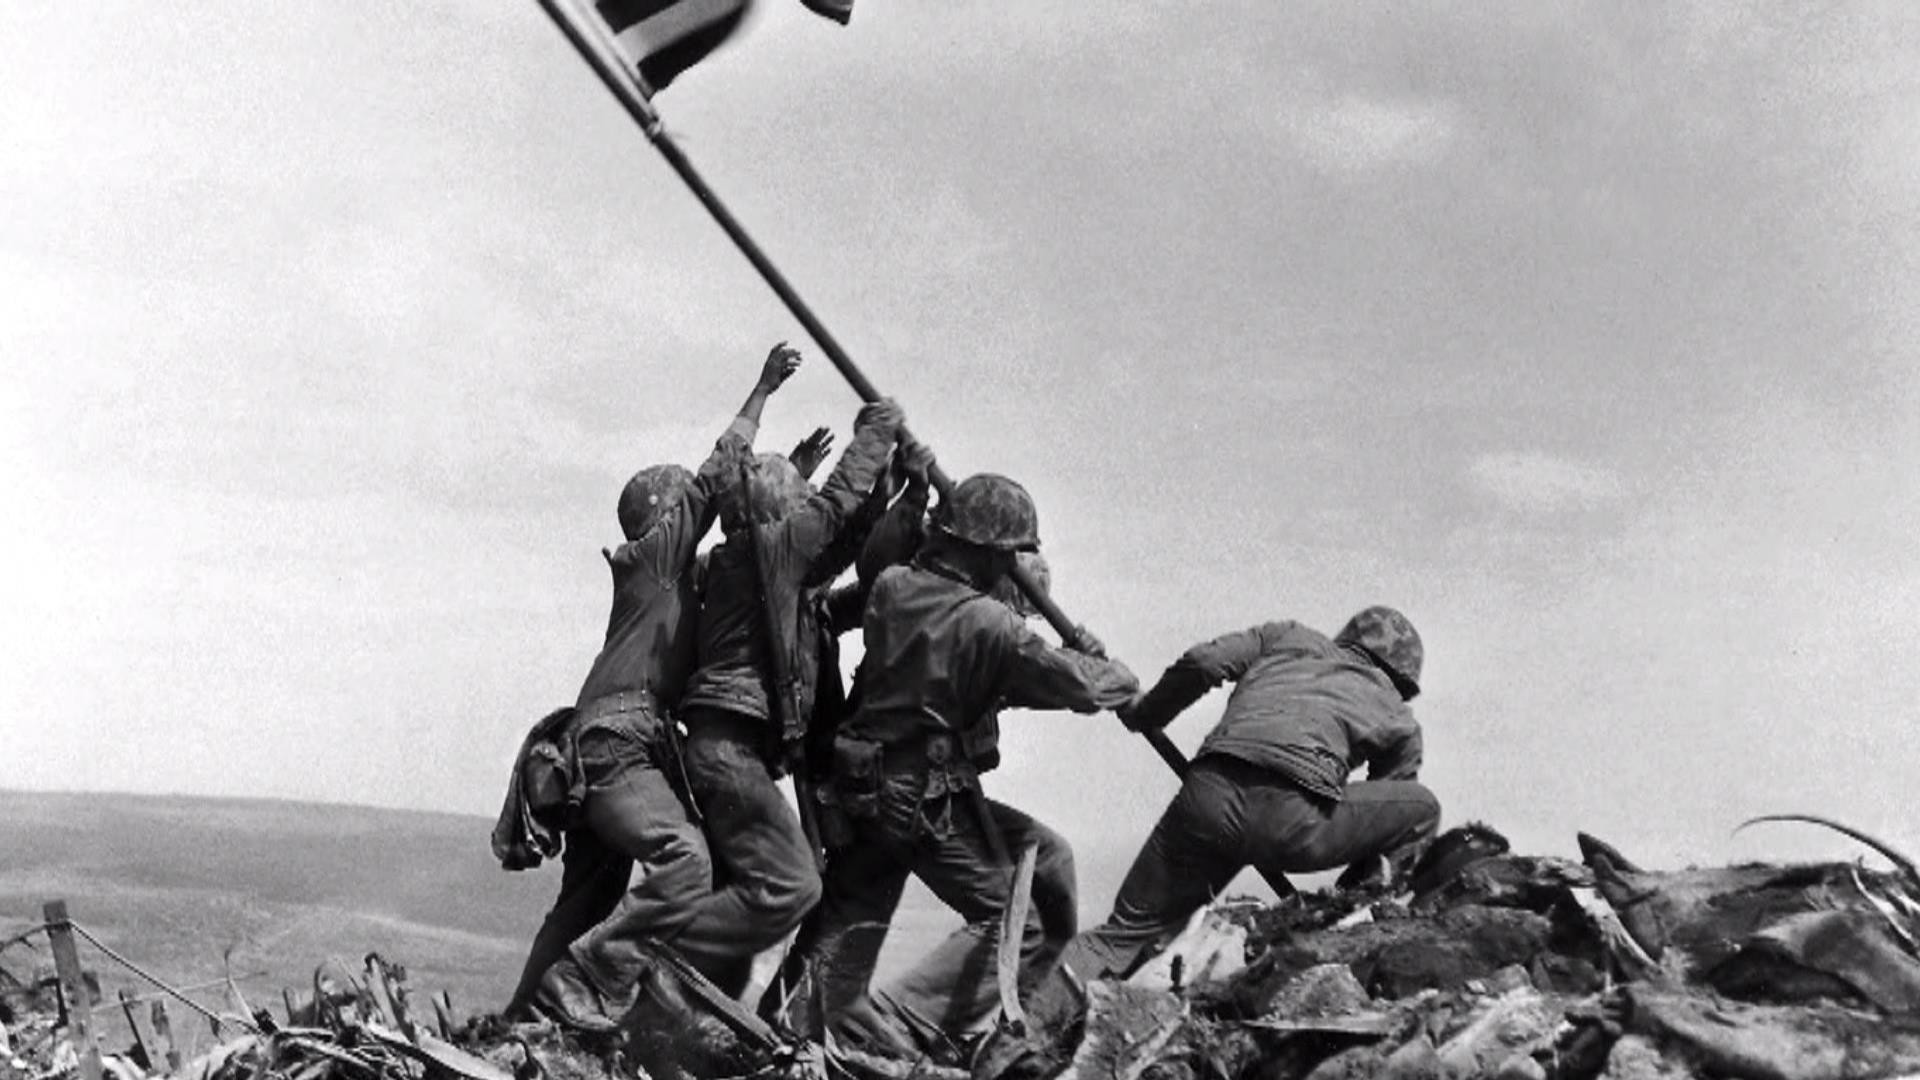 1920x1080 Man in Iwo Jima Flag-Raising Photo Was Misidentified, Marine Corps Says -  NBC News